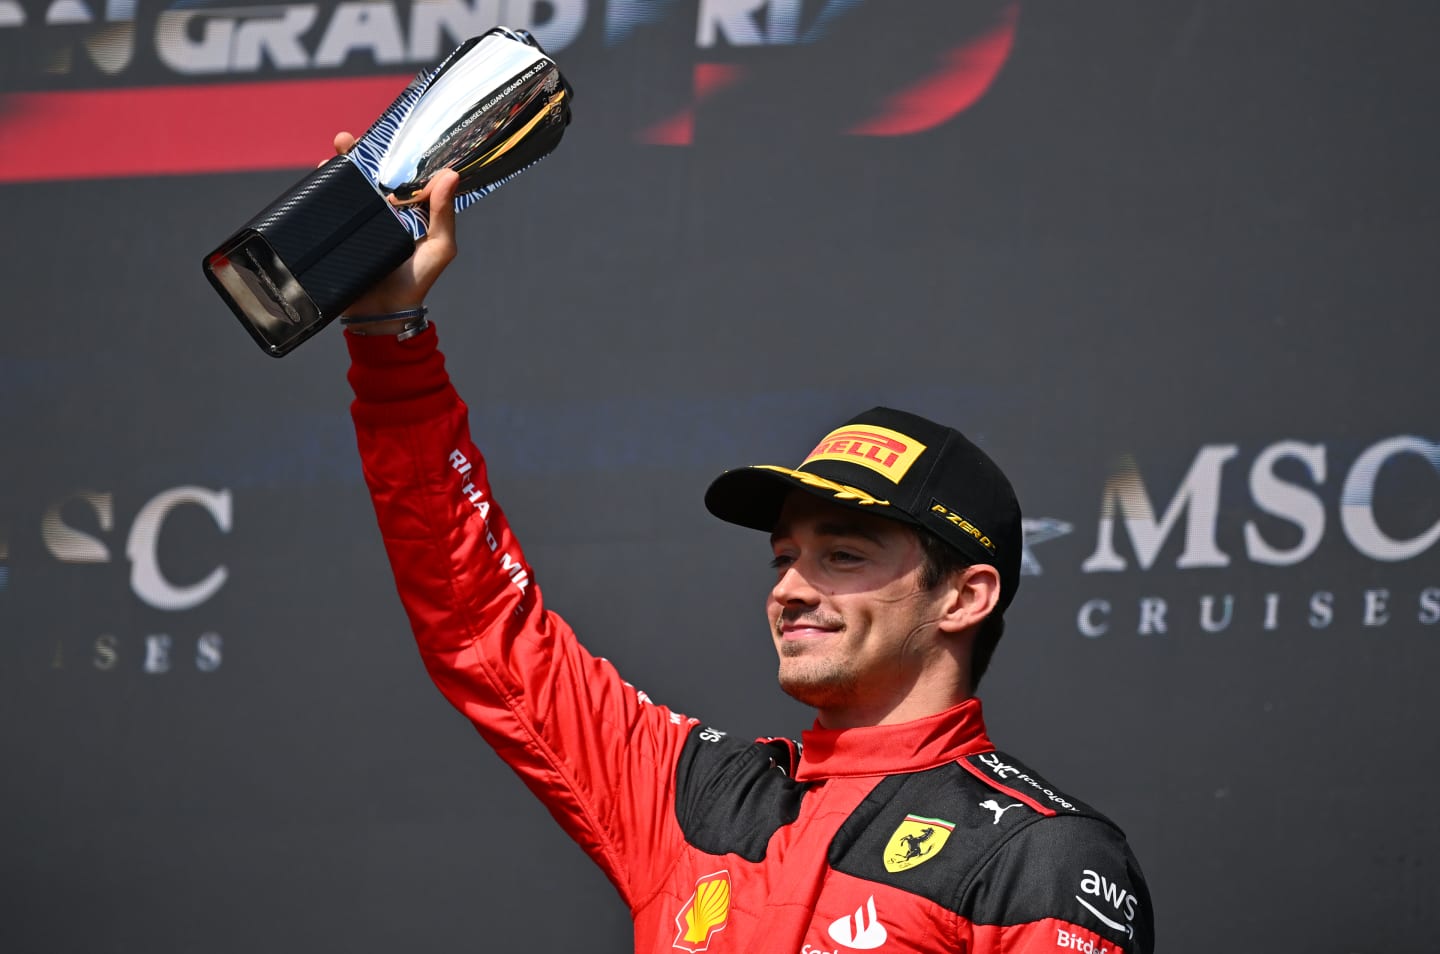 SPA, BELGIUM - JULY 30: Third placed Charles Leclerc of Monaco and Ferrari celebrates on the podium